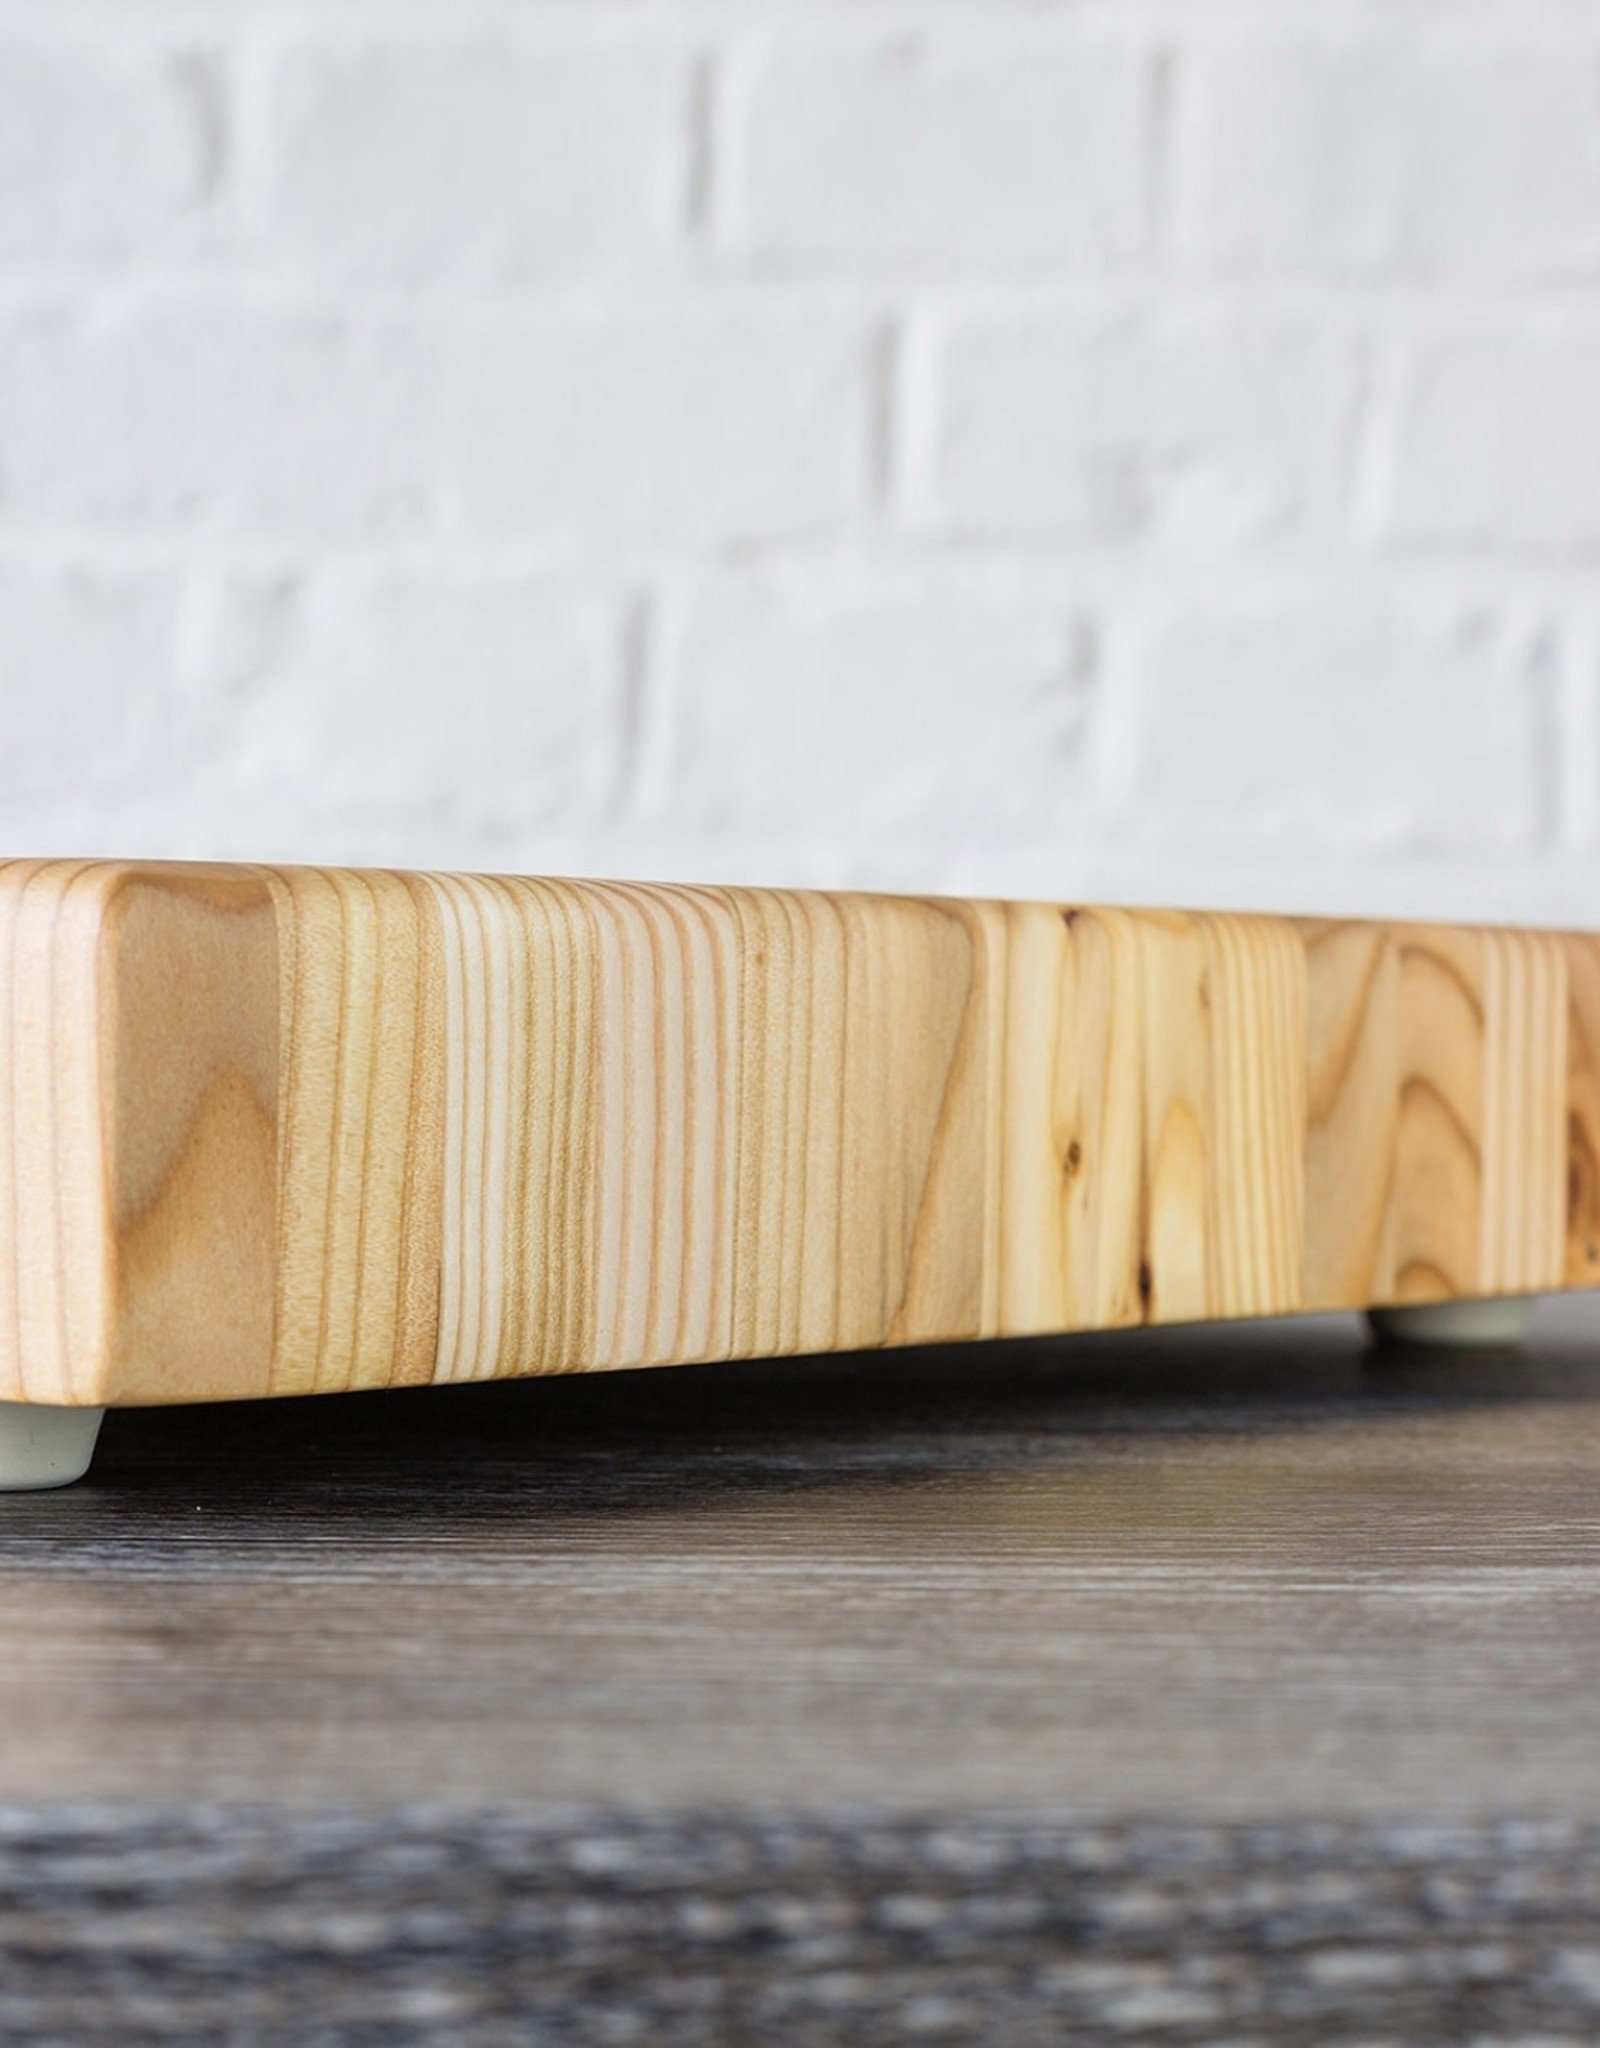 Wood Tiger Stripe Buffet Board #1  21 x 7 x 2.5 inches